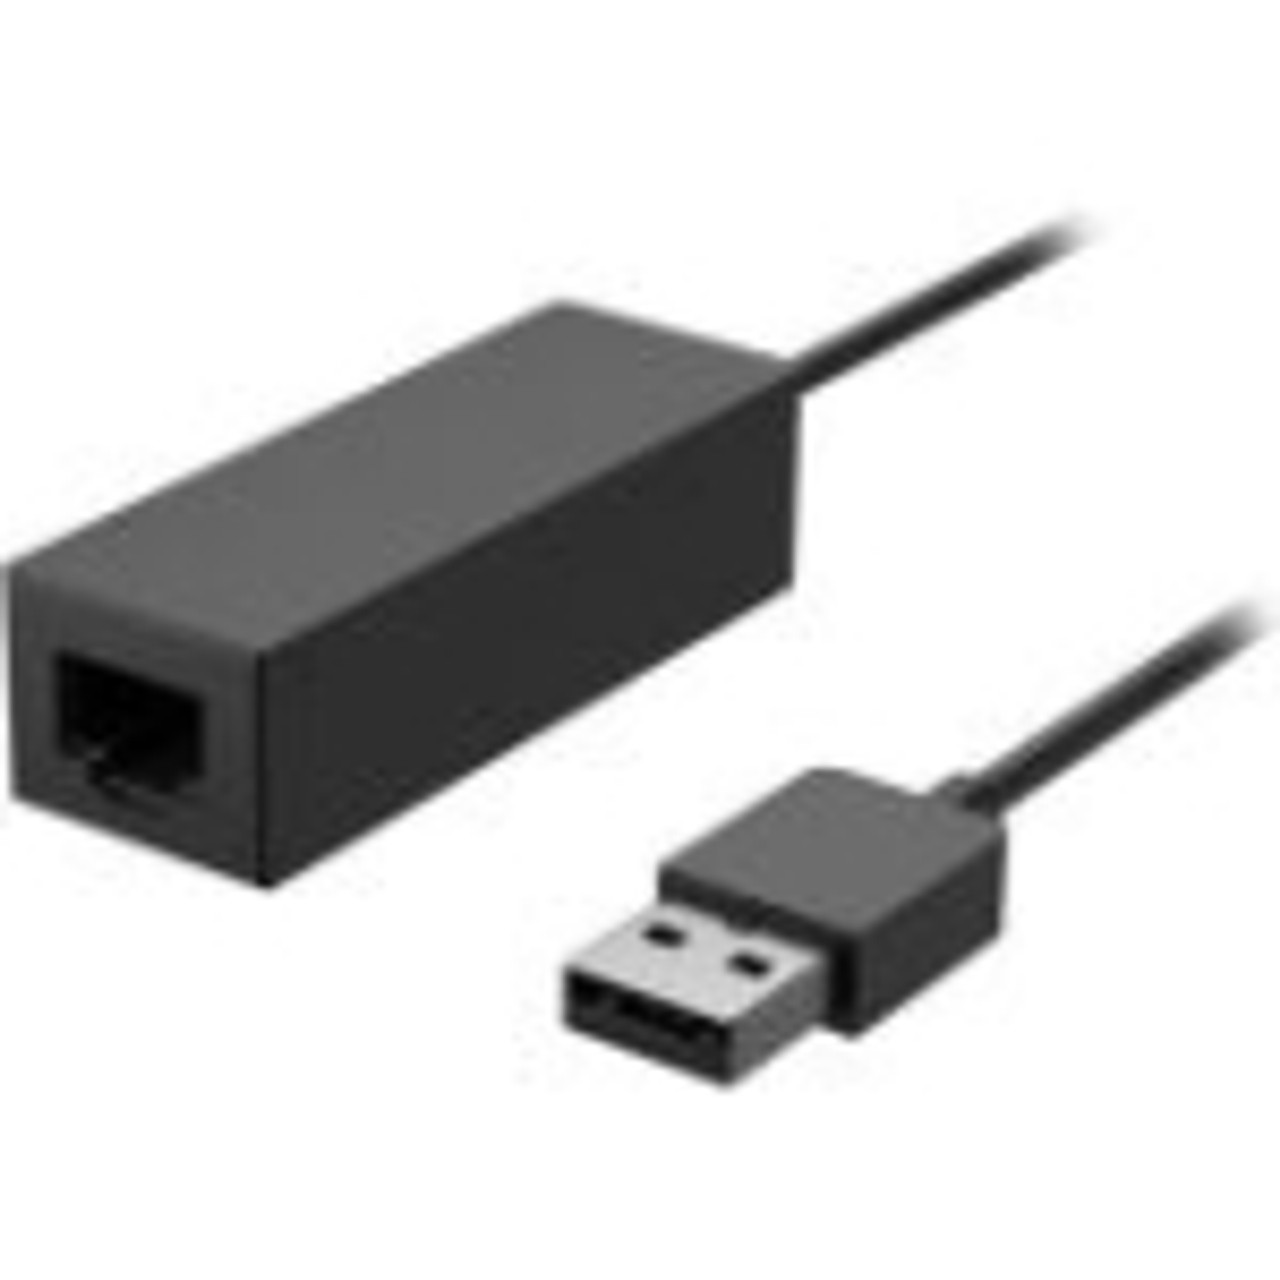 EJR-00002 Microsoft Surface USB 3.0 Gigabit Ethernet Adapter USB 3.0 1 Port(s) 1 Twisted Pair (Refurbished)